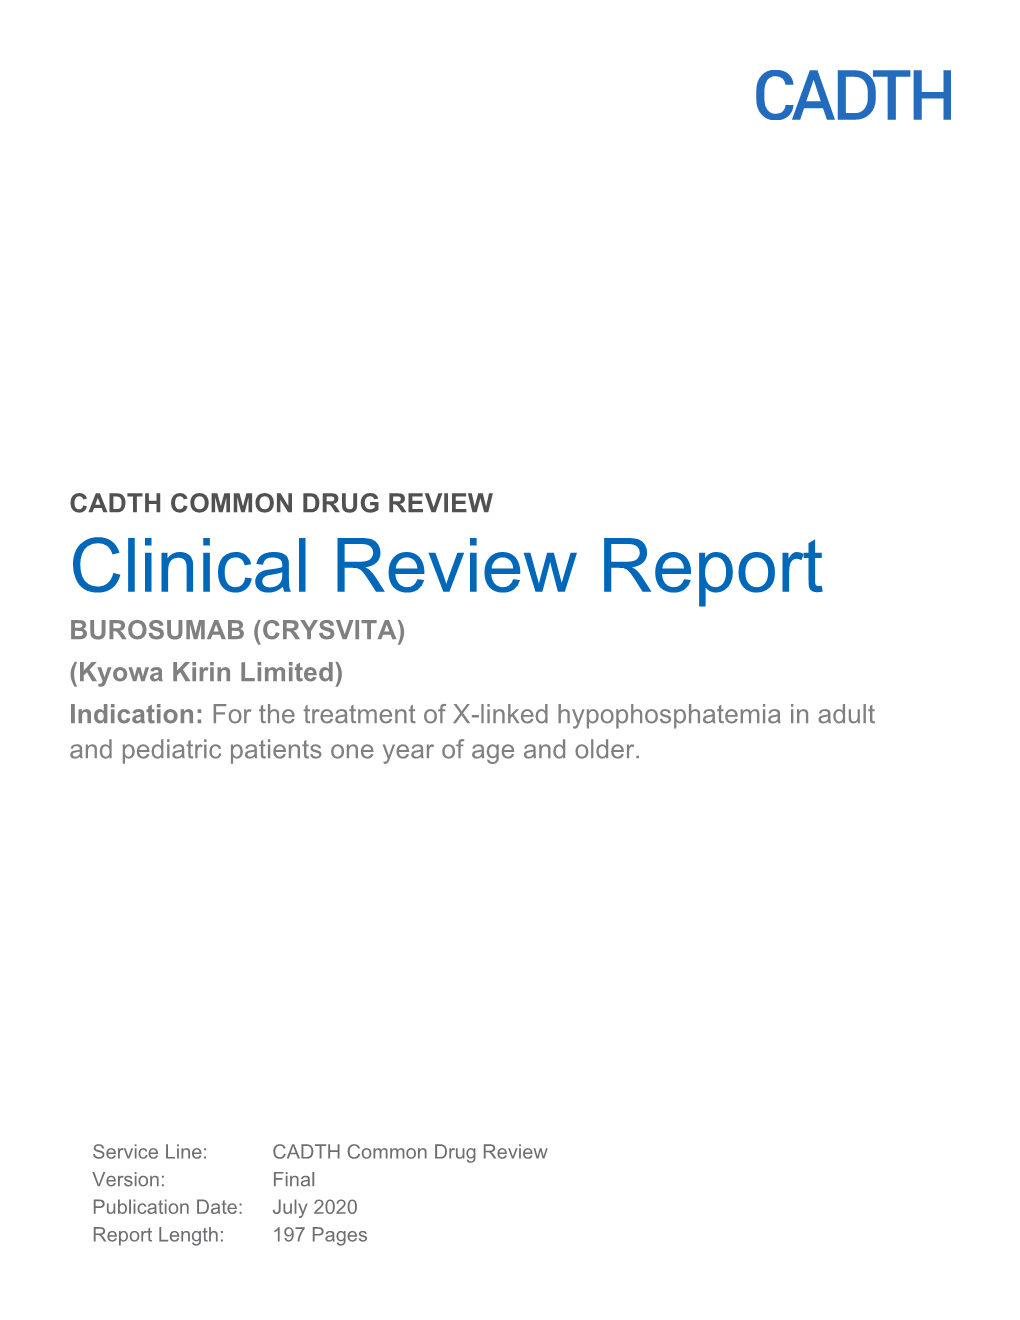 Clinical Review Report for Burosumab (Crysvita) 2